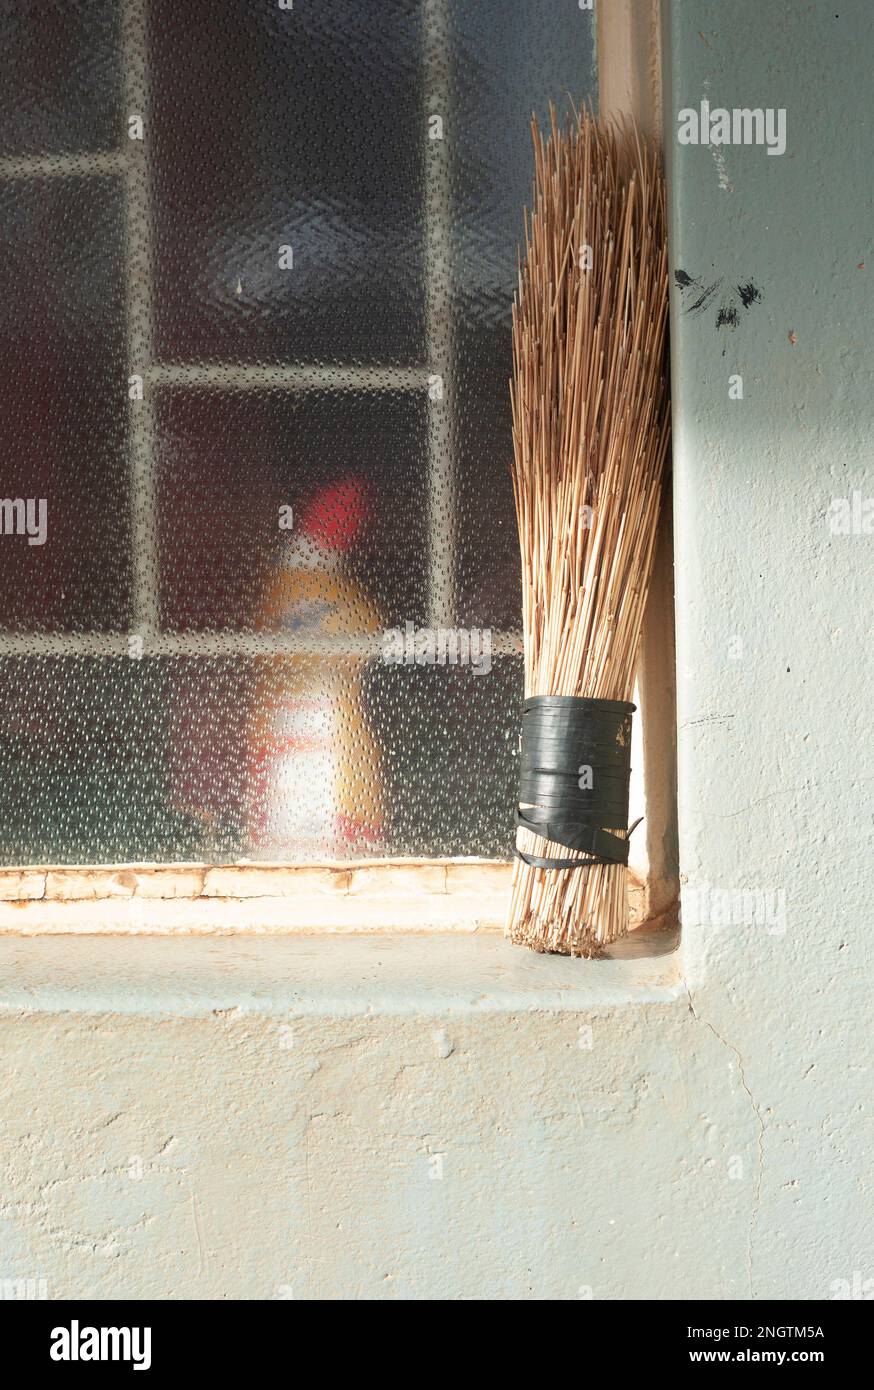 Straw broom balanced on the window ledge of a Zambian home Stock Photo